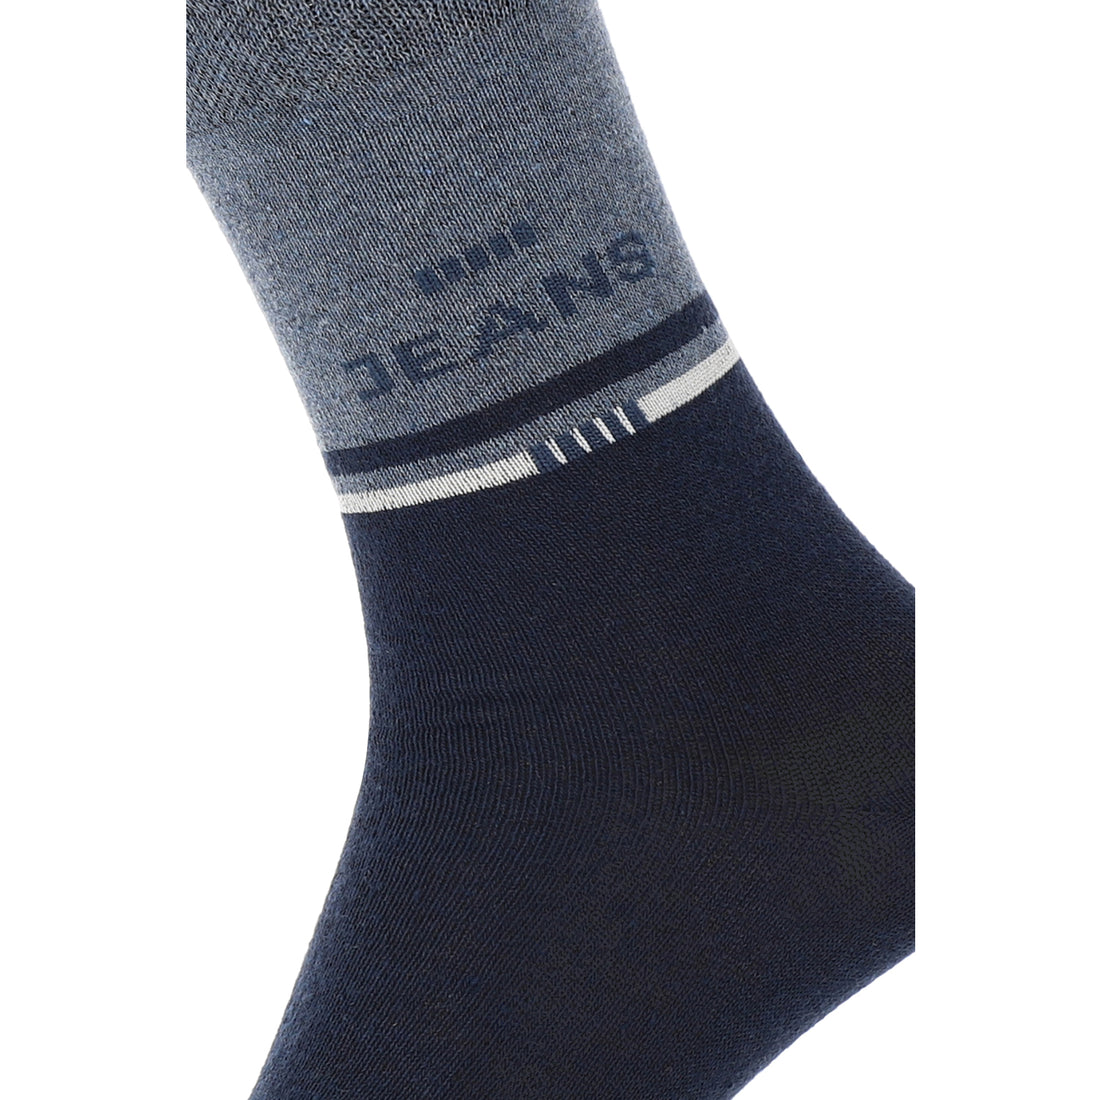 ChiliLifestyle Socken Jeans, Damen, Herren, 5 Paar, Baumwolle, Blau Töne